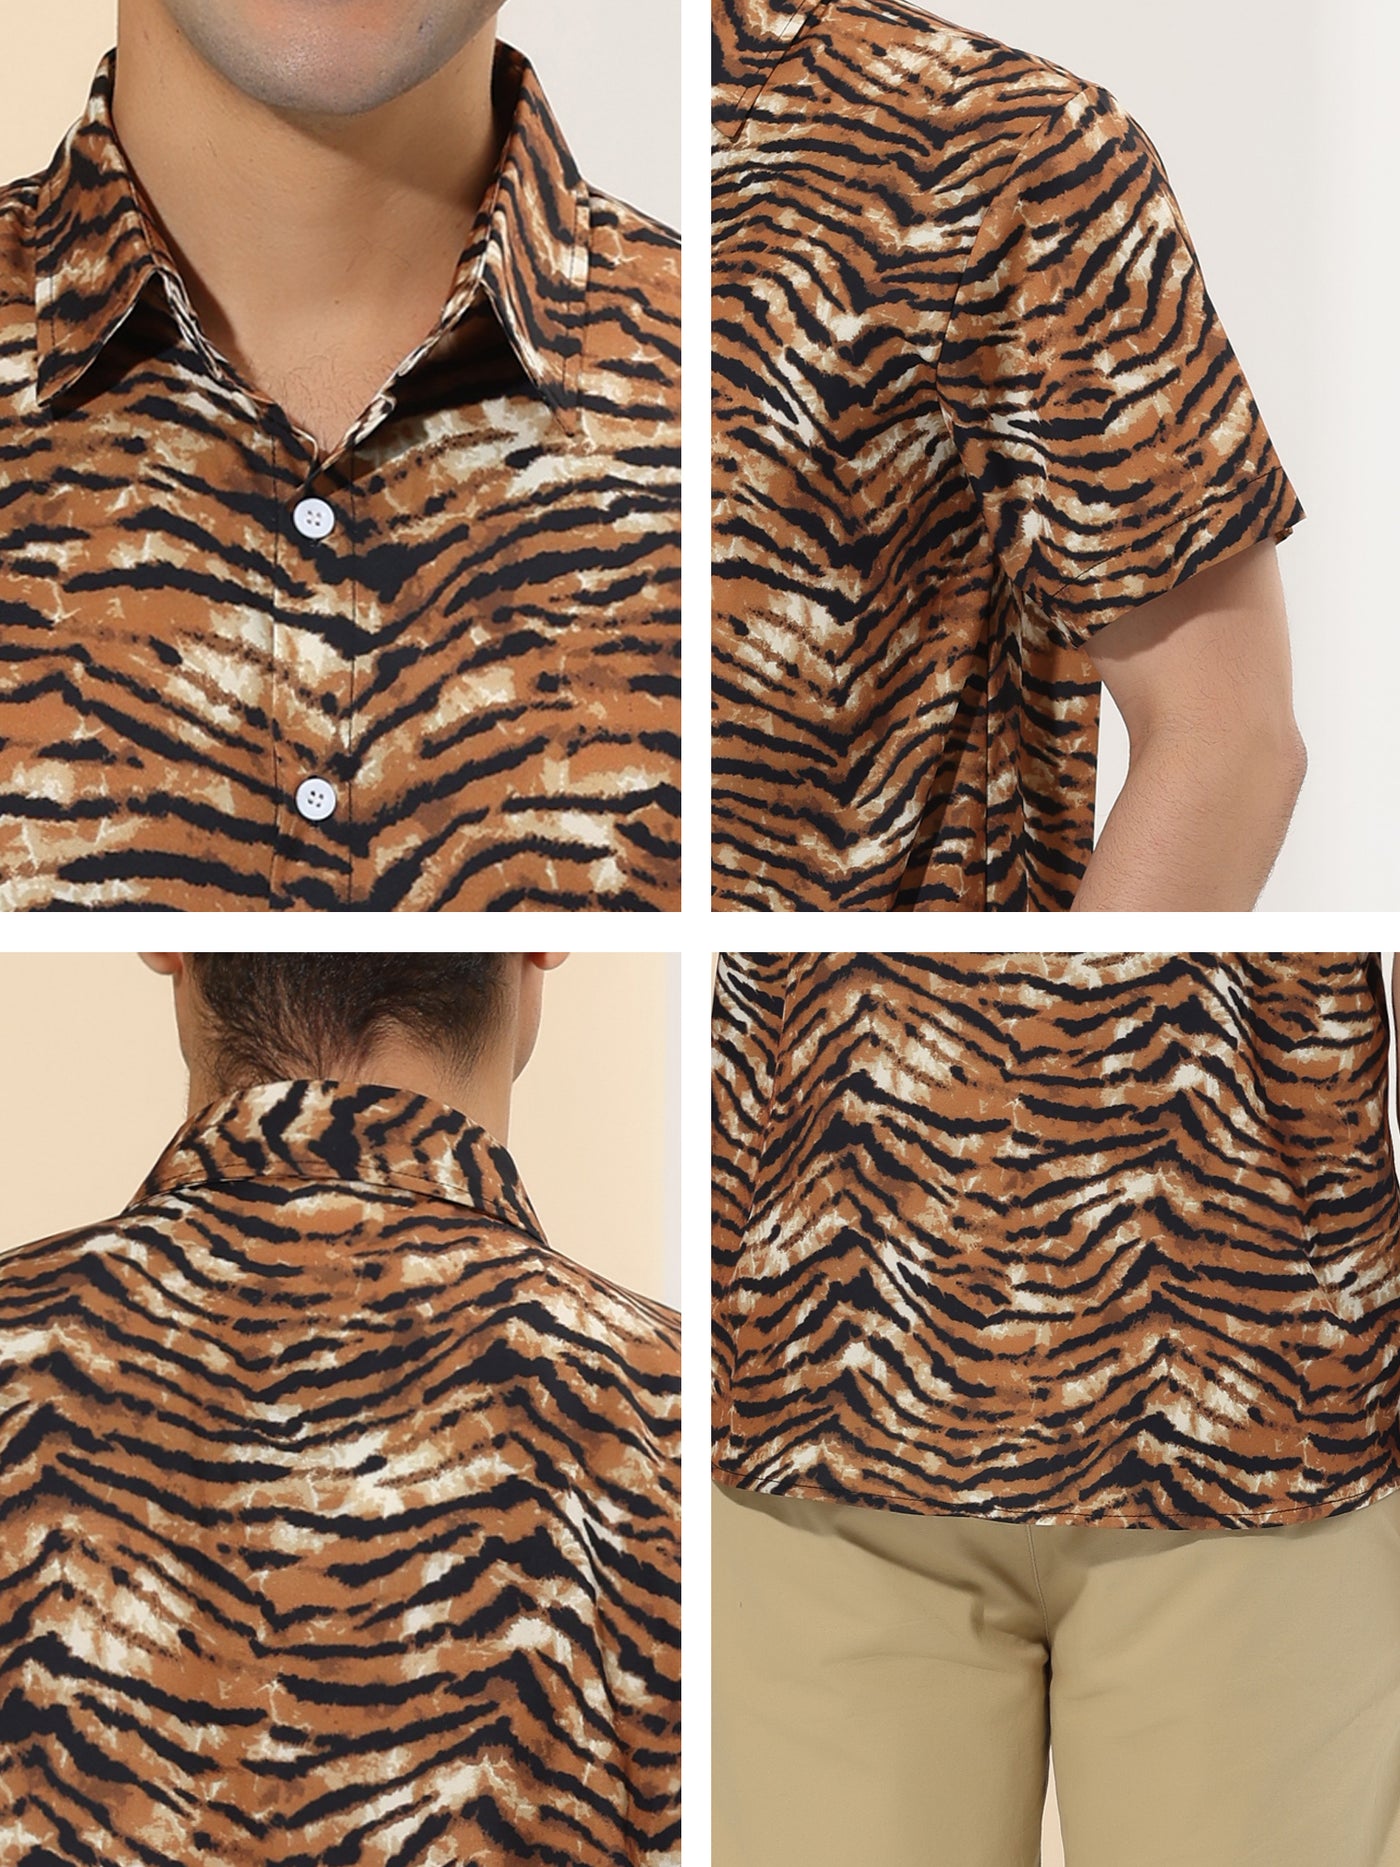 Bublédon Casual Summer Leopard Printed Short Sleeve Shirts